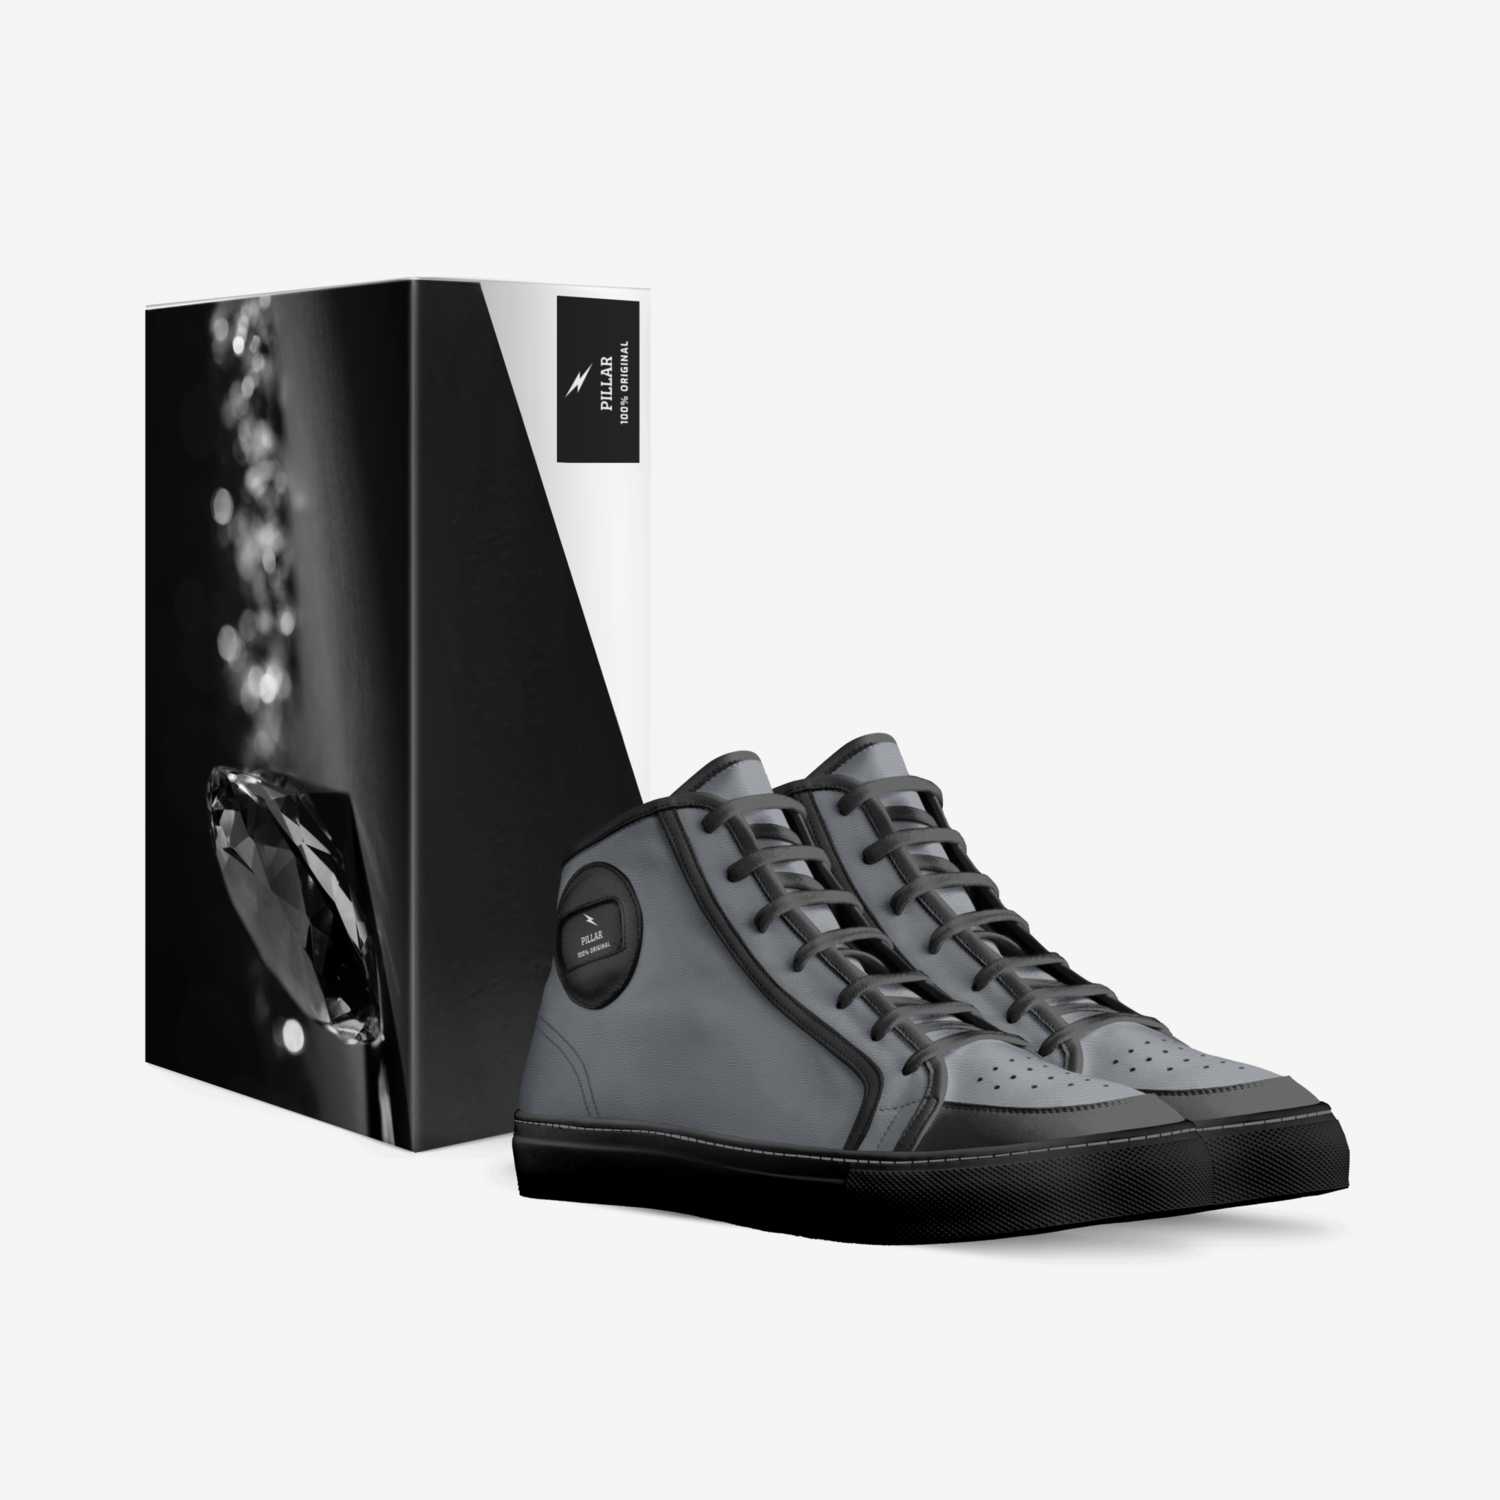 PILLAR  custom made in Italy shoes by Joseph Pillar | Box view